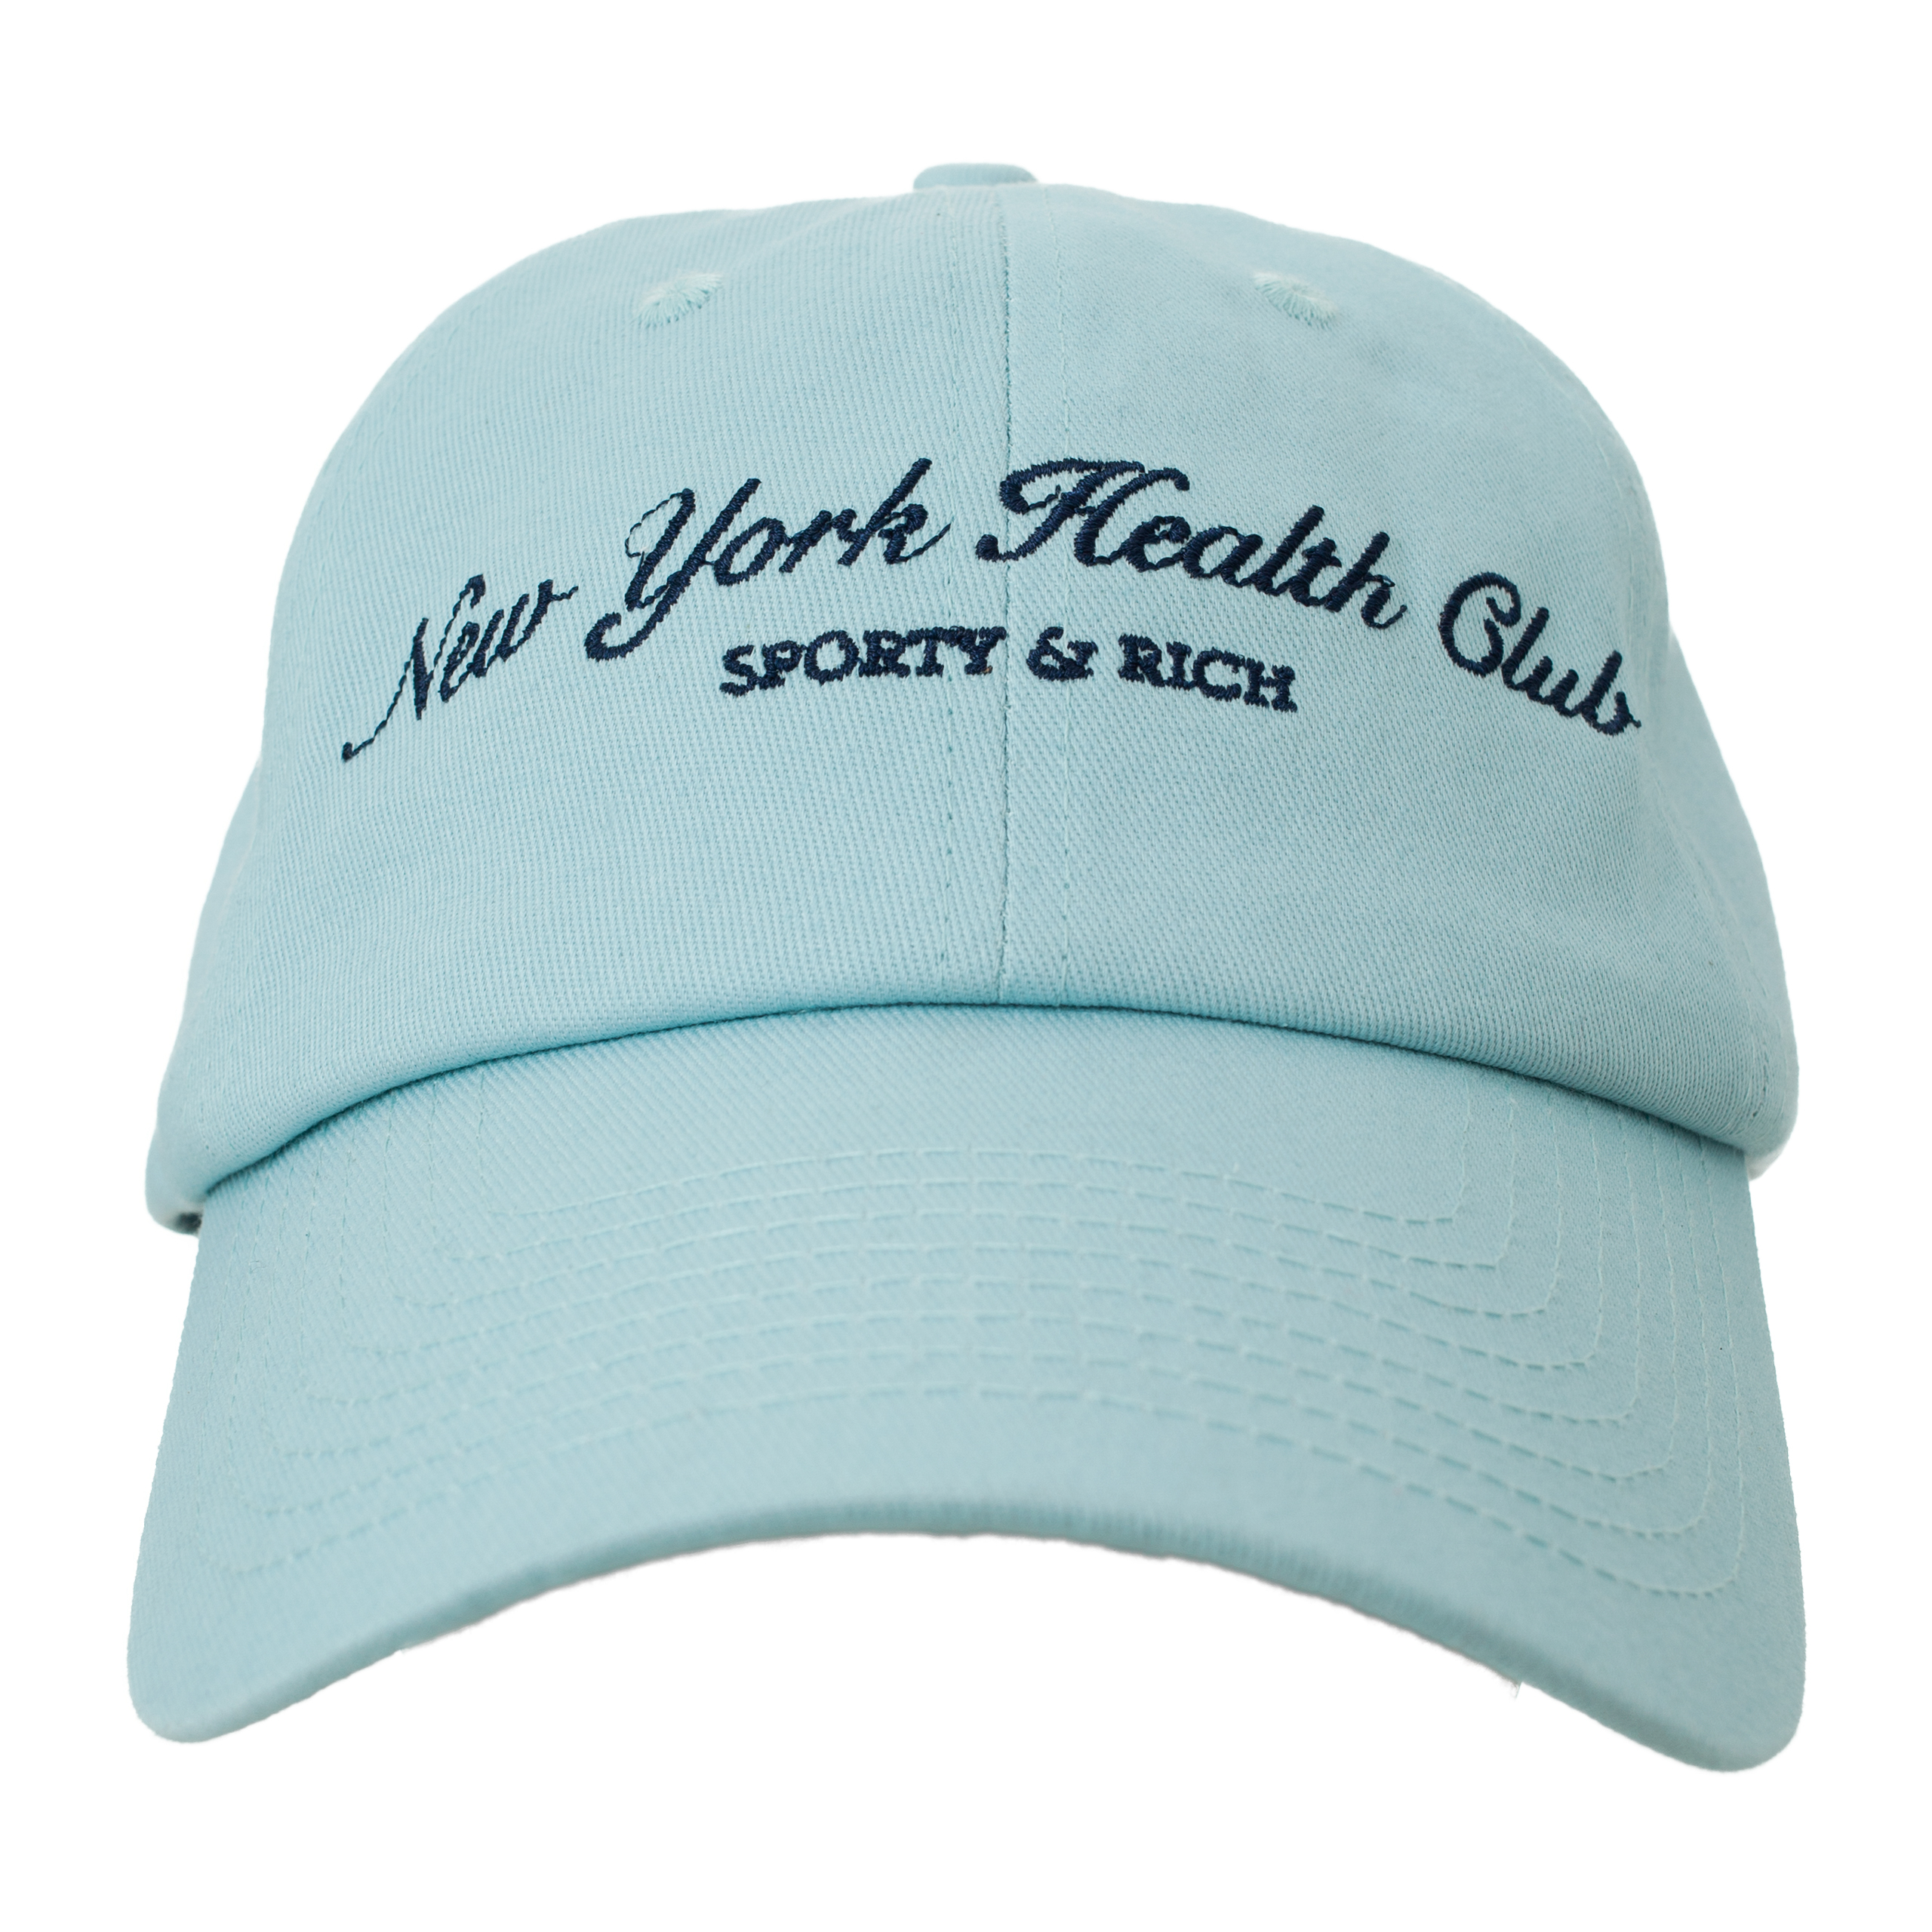 Голубая кепка с вышивкой NY Health Club SPORTY & RICH AC843HO, размер One Size